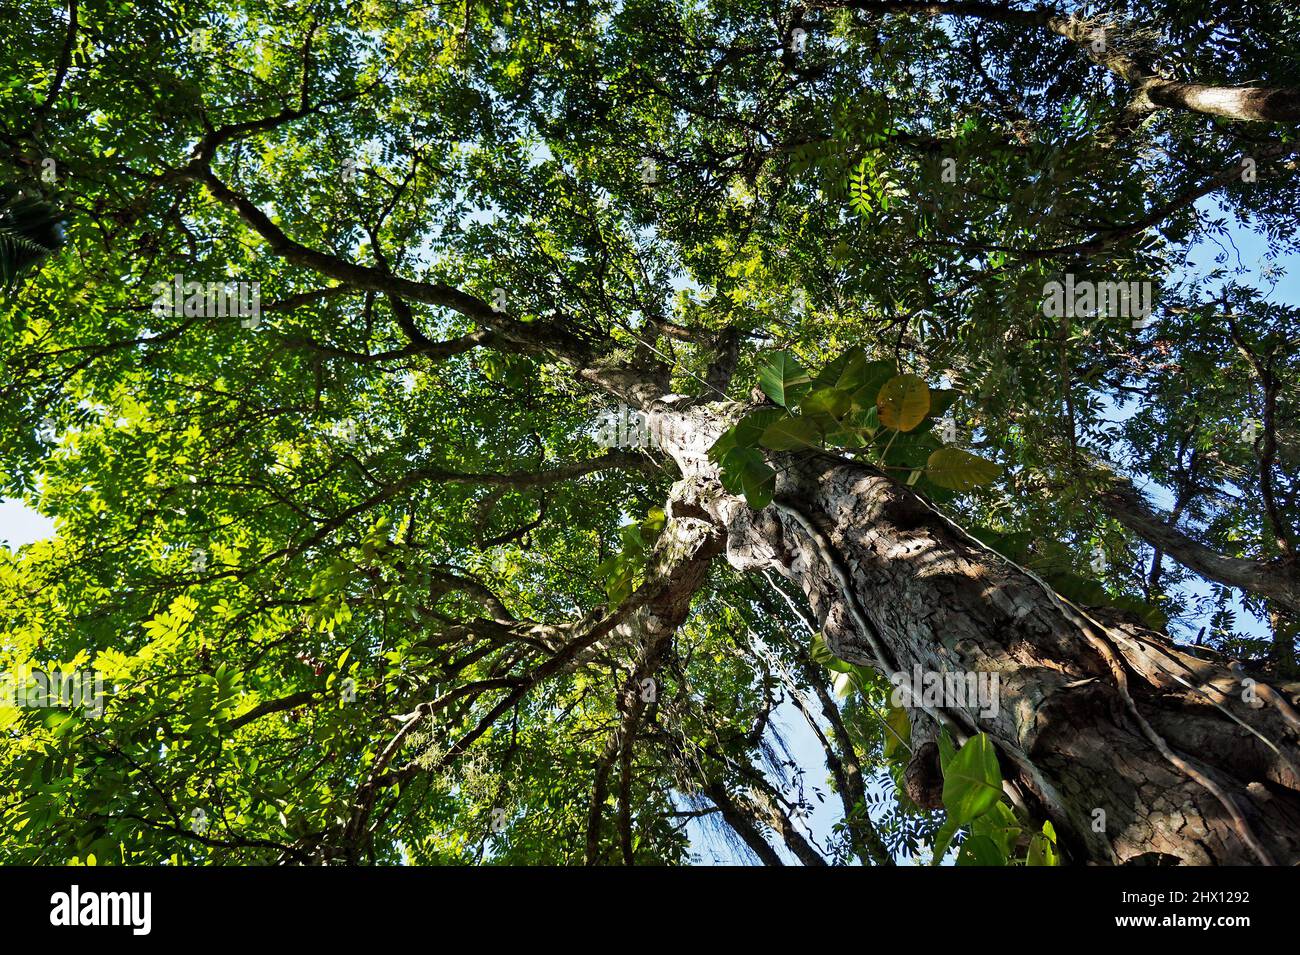 Crabwood tree or Andiroba tree (Carapa guianensis) Stock Photo